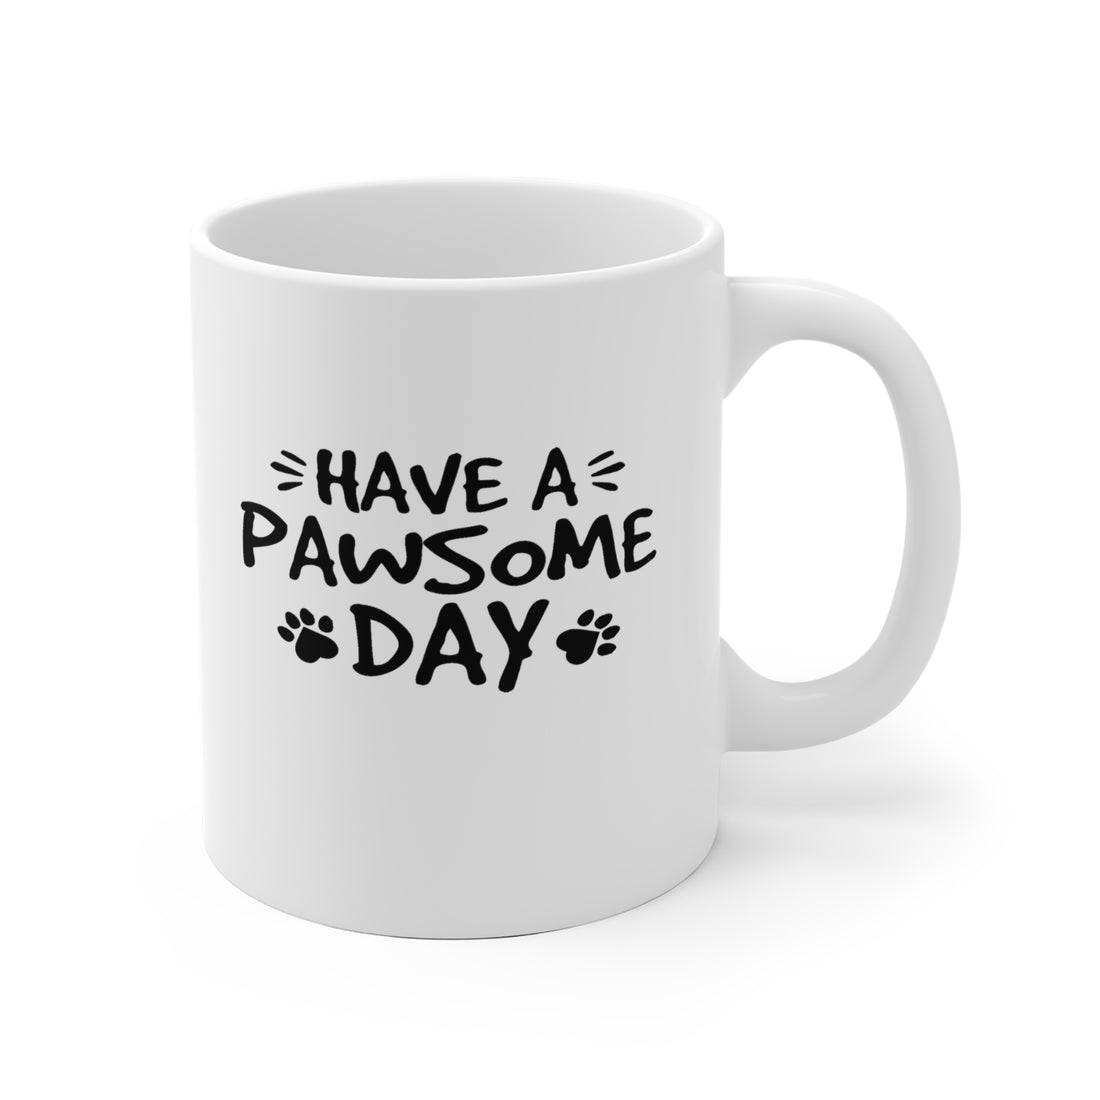 Have A Pawsome Day - White Ceramic Mug 2 sizes Available